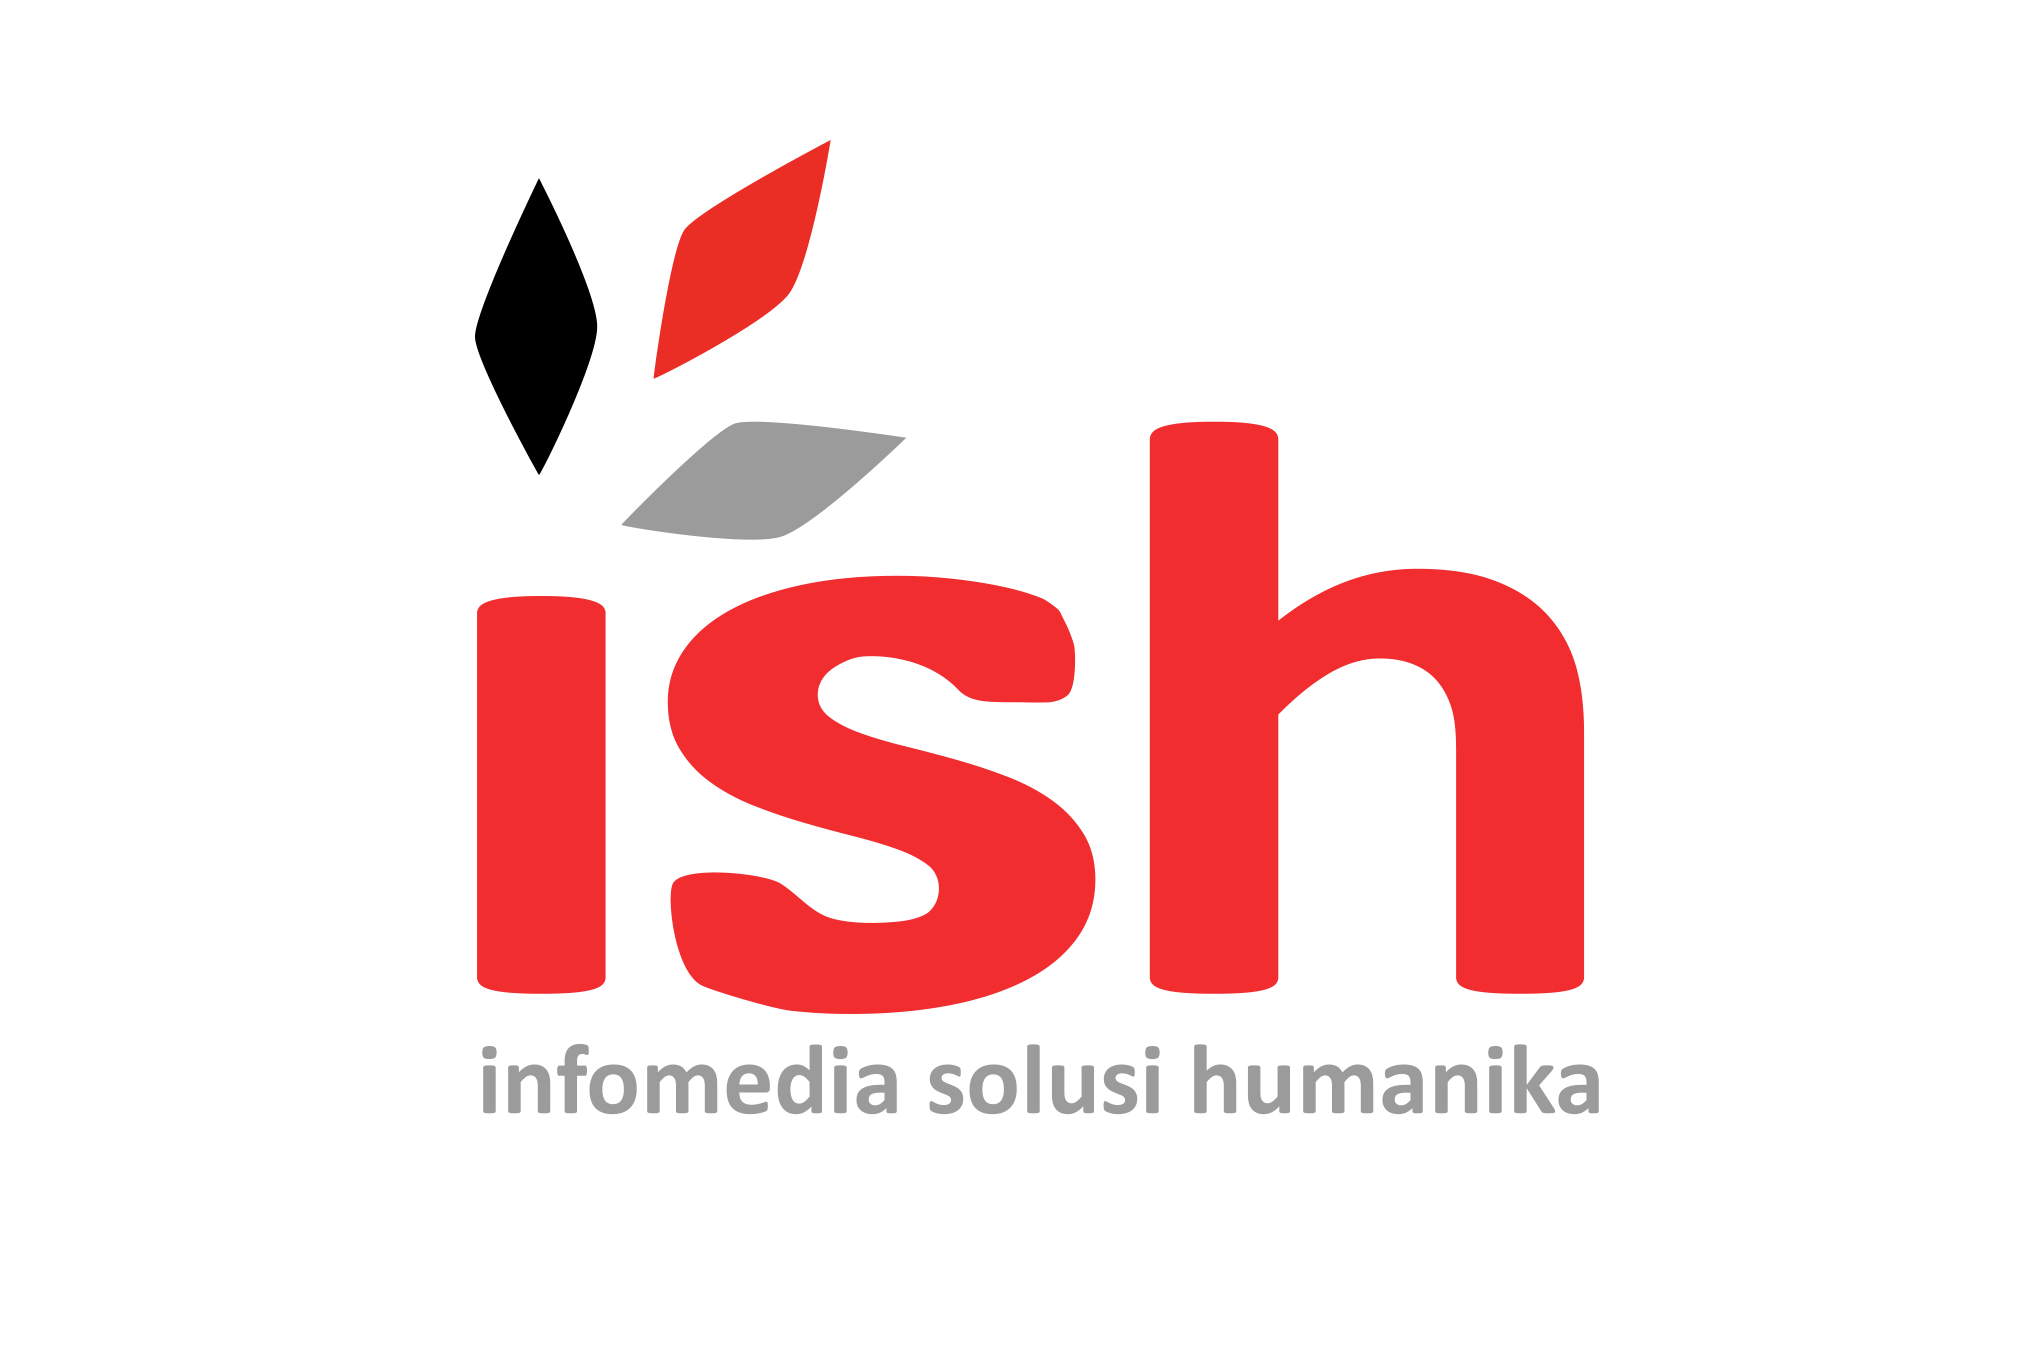 Lowongan Kerja Pt Infomedia Solusi Humanika Telkom Group Banyuwangi Mei 2021 Adakarir Com